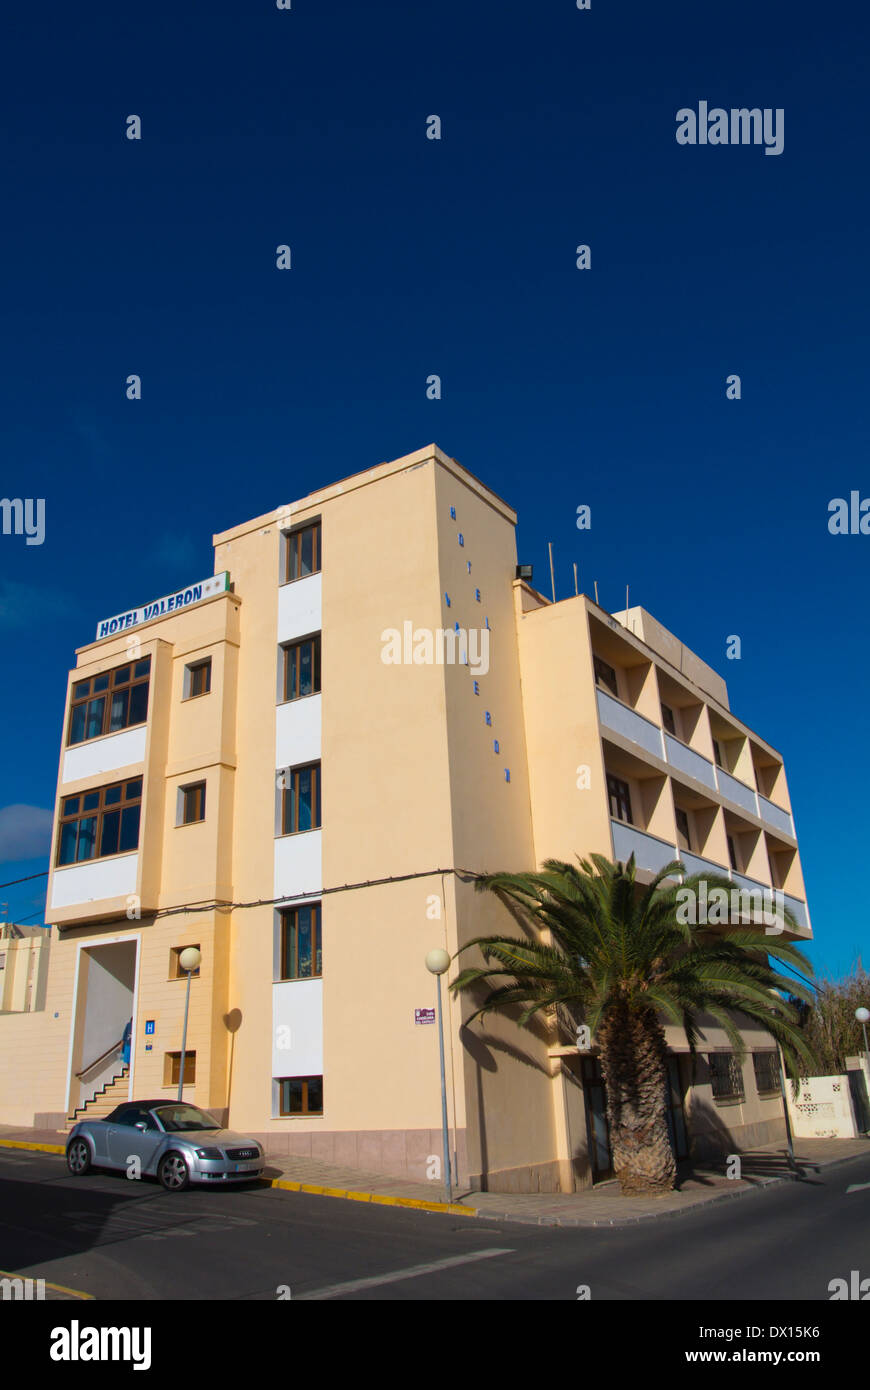 Hotel Valeron, Puerto del Rosaro, Fuerteventura, the Canary Islands, Spain, Europe Stock Photo